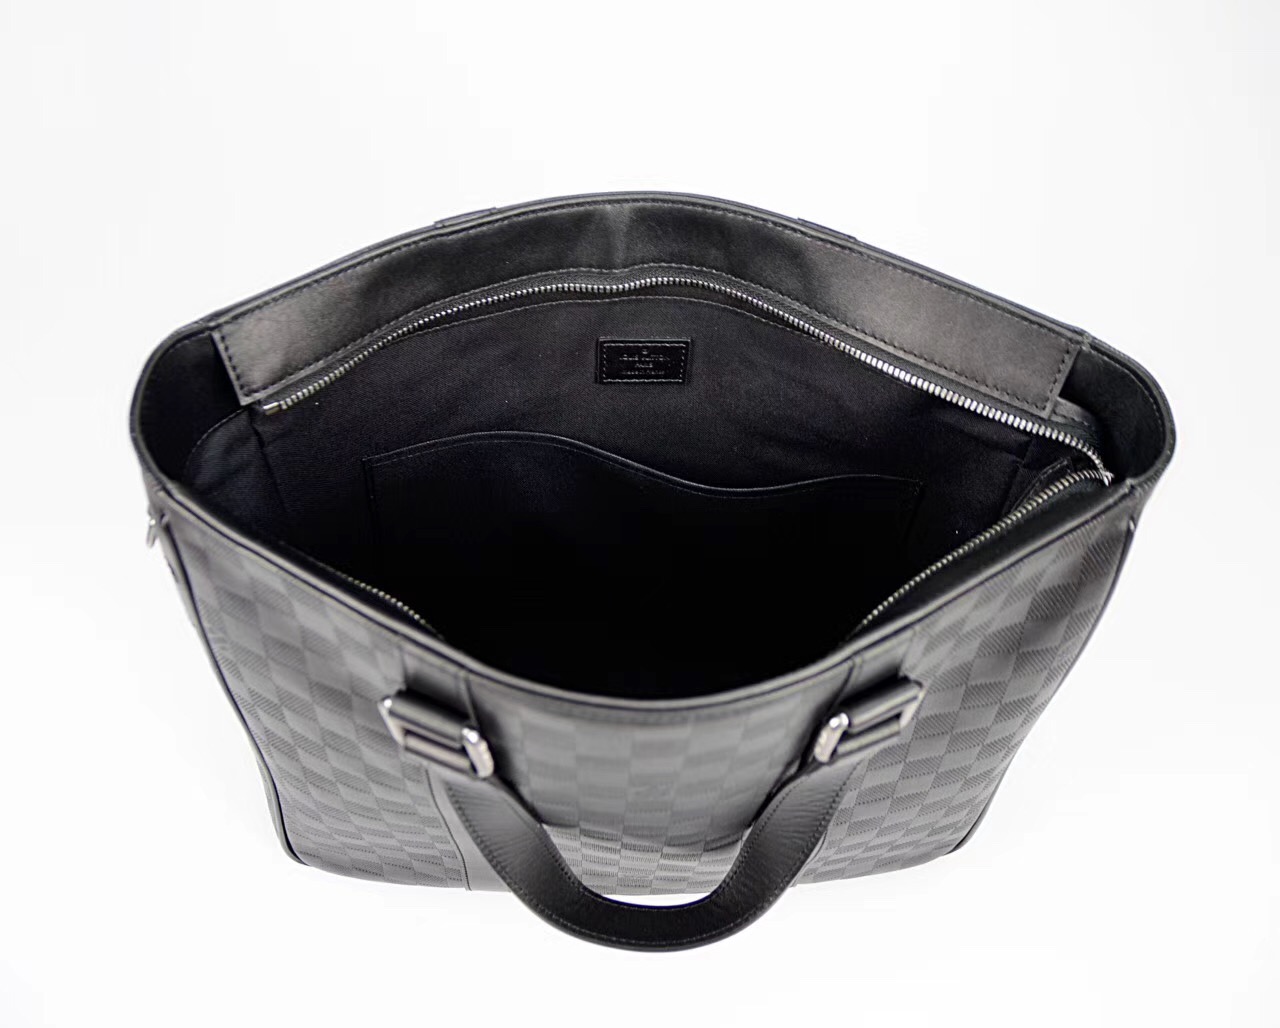 Men LV Louis Vuitton Damier Tote Leather Handbags N41269 bags Black [LV1187] - $389.00 : Luxury Shop